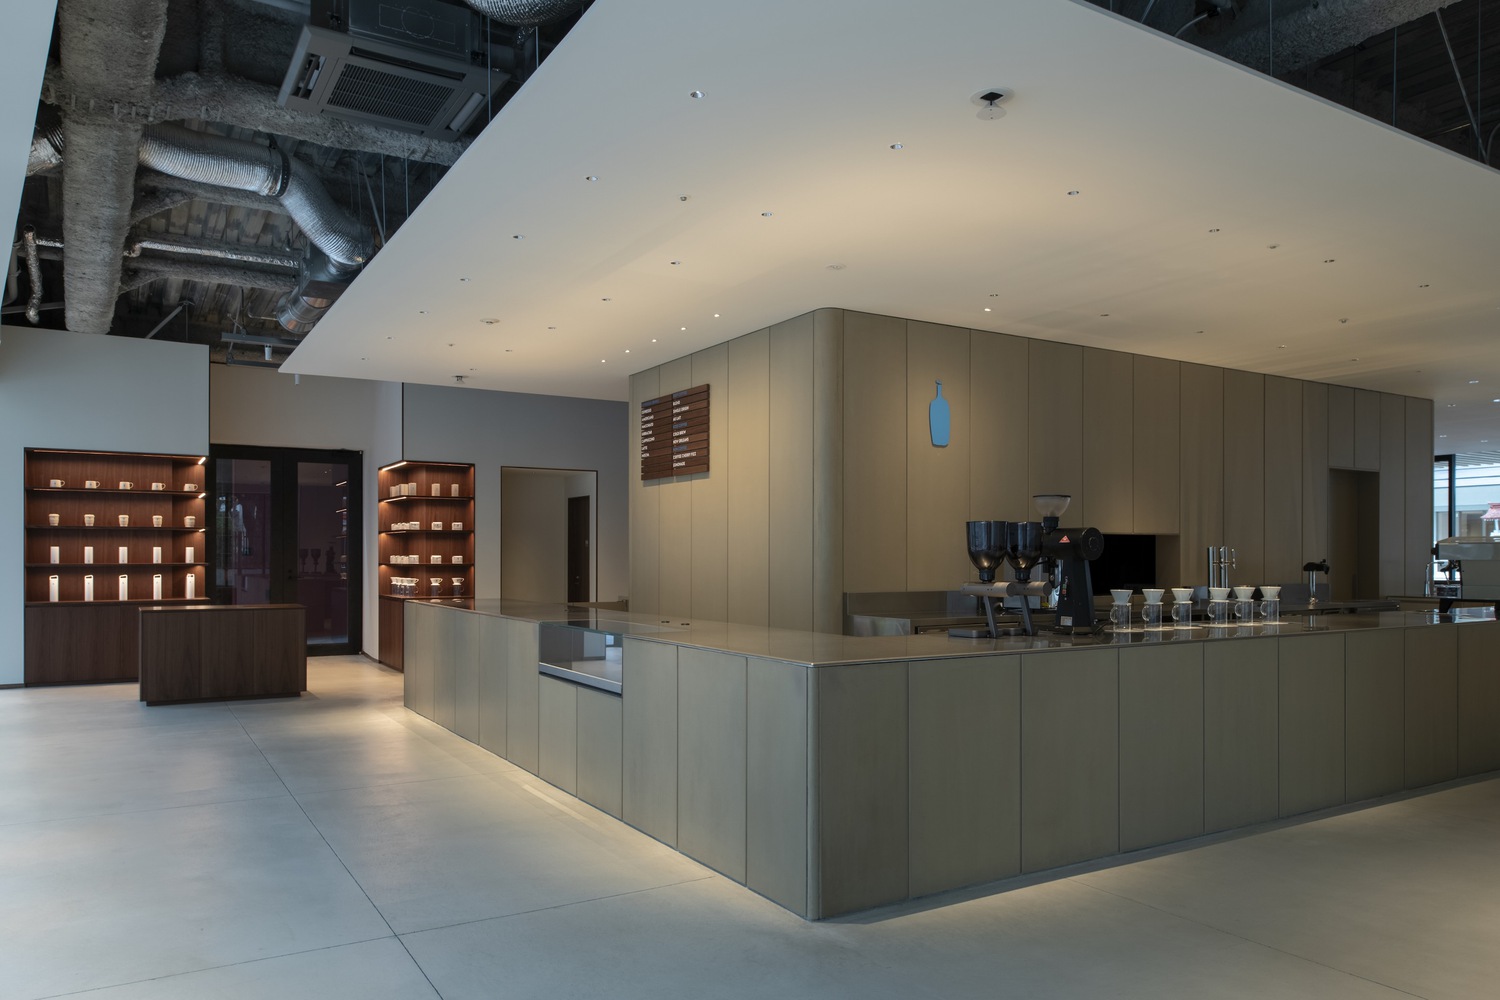 CASE-REAL,咖啡厅设计案例,咖啡店设计,日本,福冈,小蓝瓶咖啡,BLUE BOTTLE COFFEE,咖啡厅设计,小蓝瓶咖啡店设计案例,网红咖啡厅,创意咖啡店